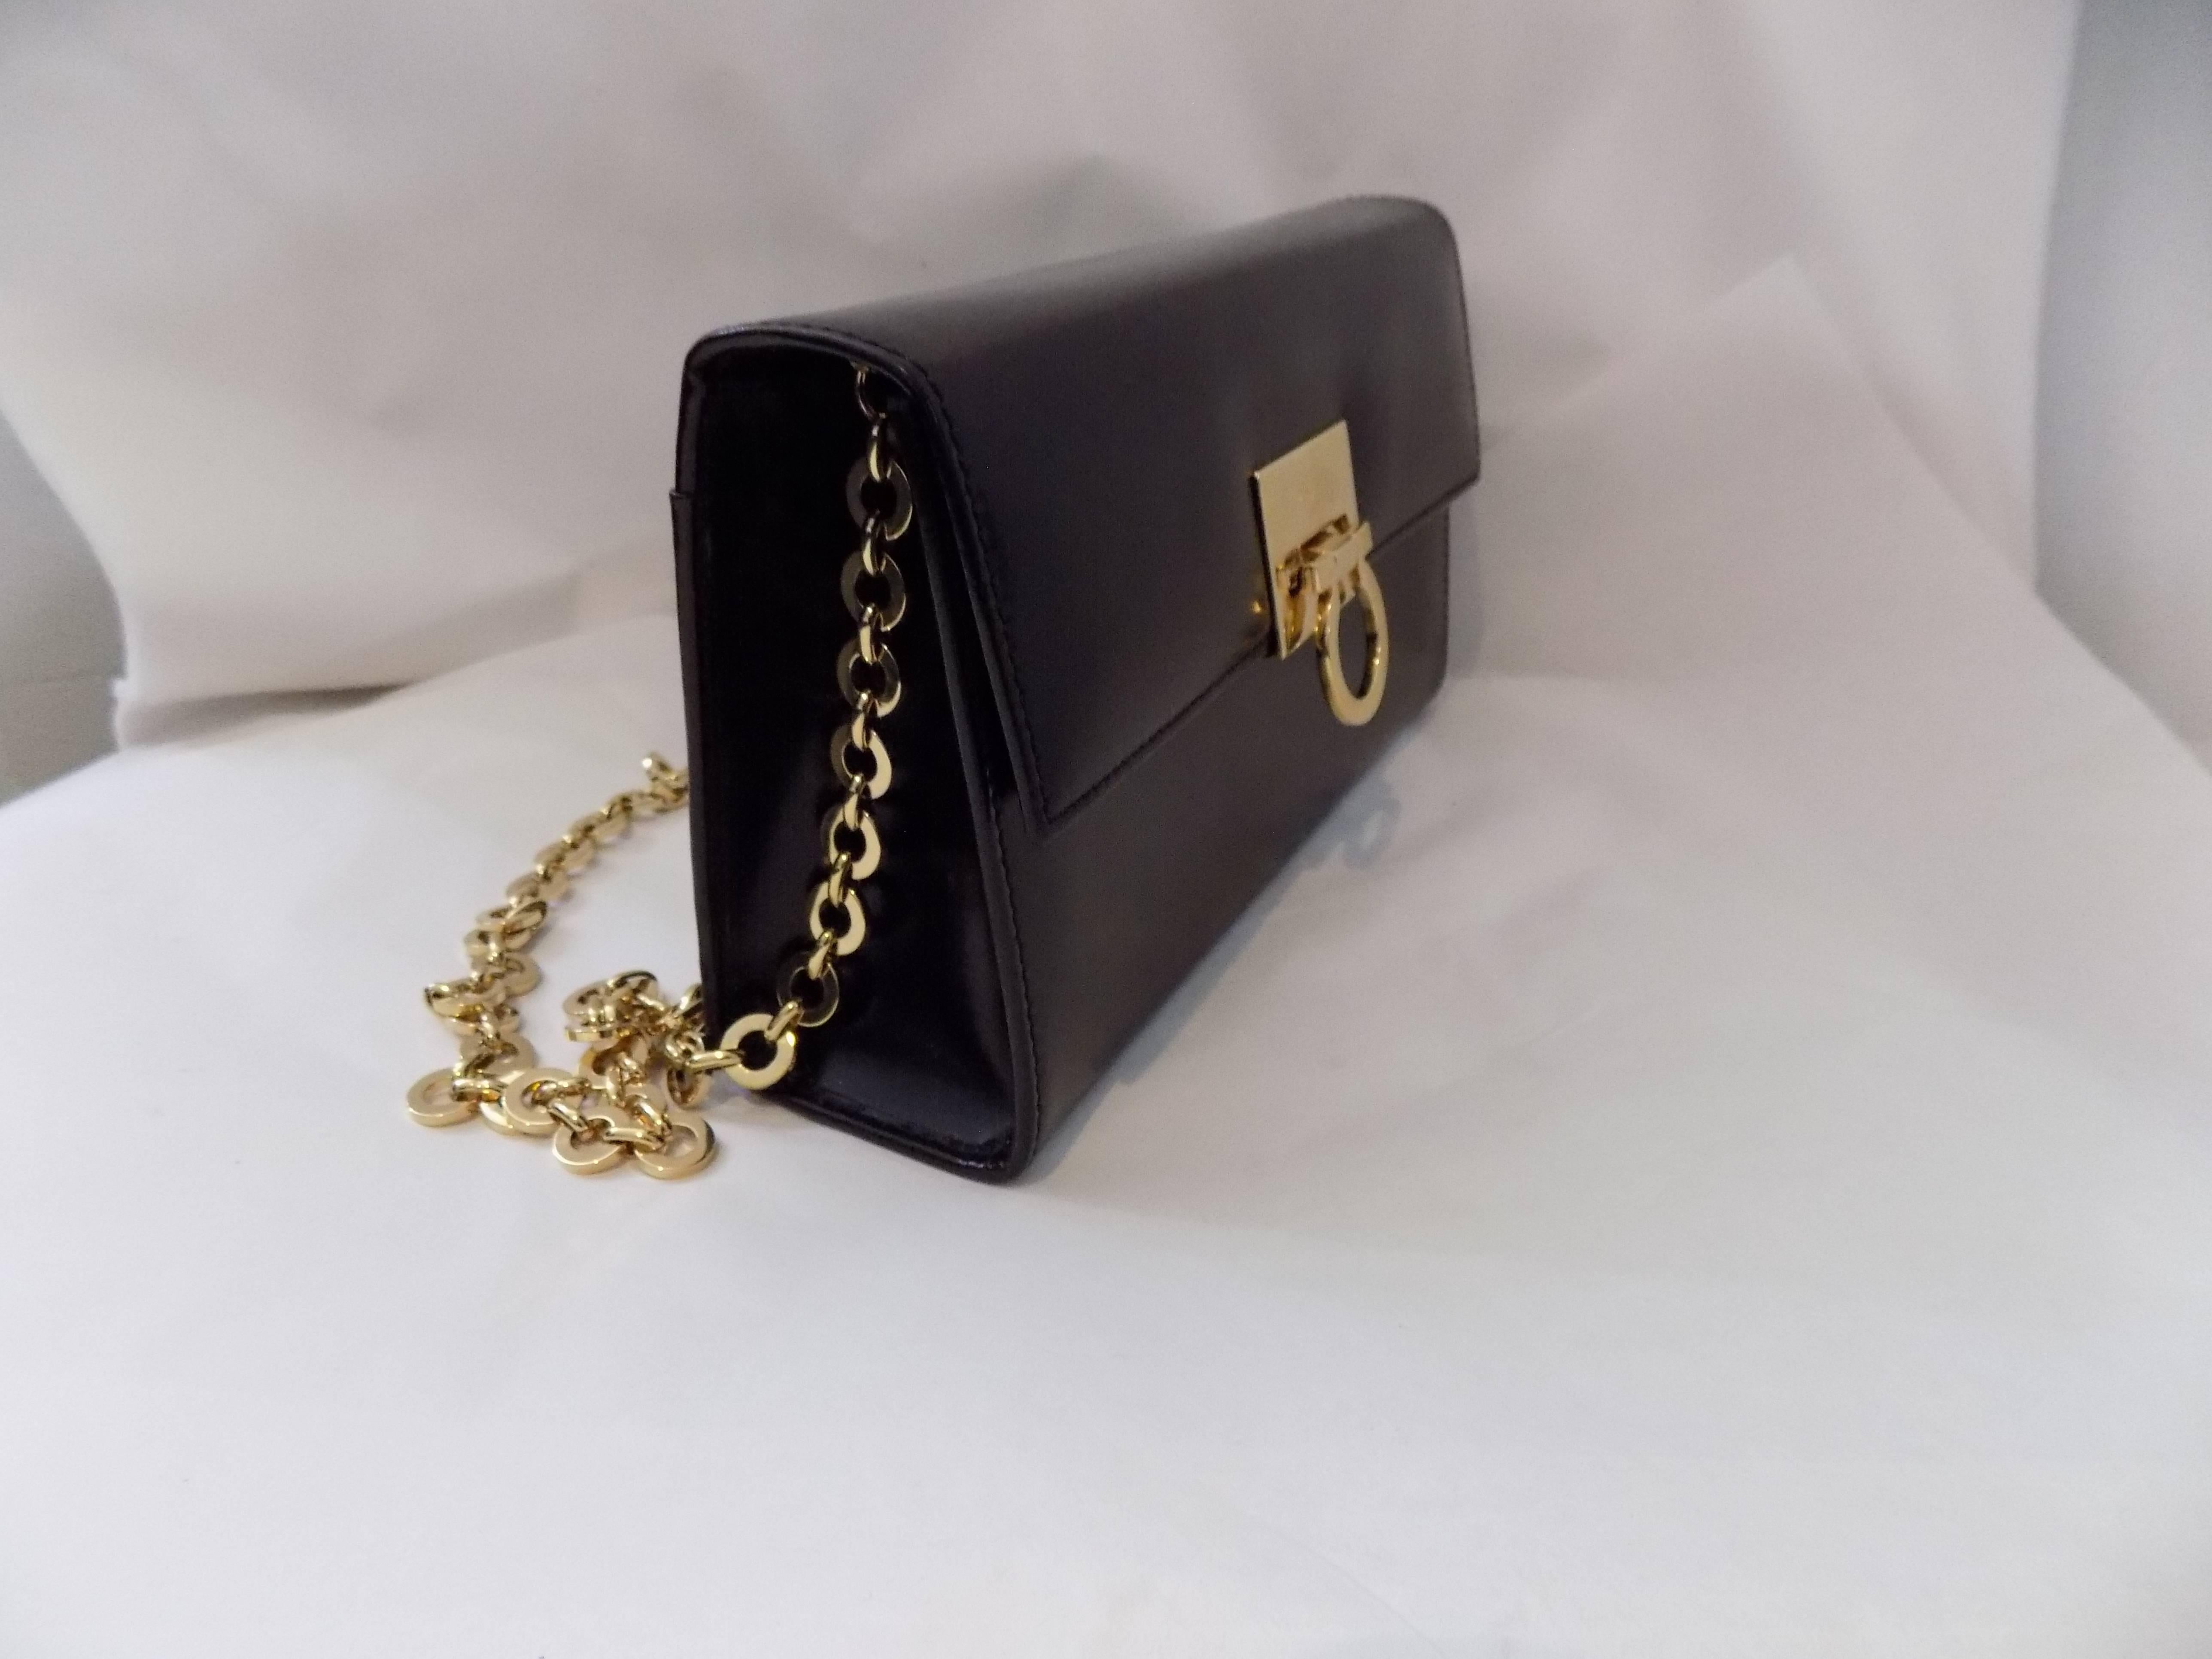  Salvatore Ferragamo black polished clutch / shoulder bag w gold chain 3